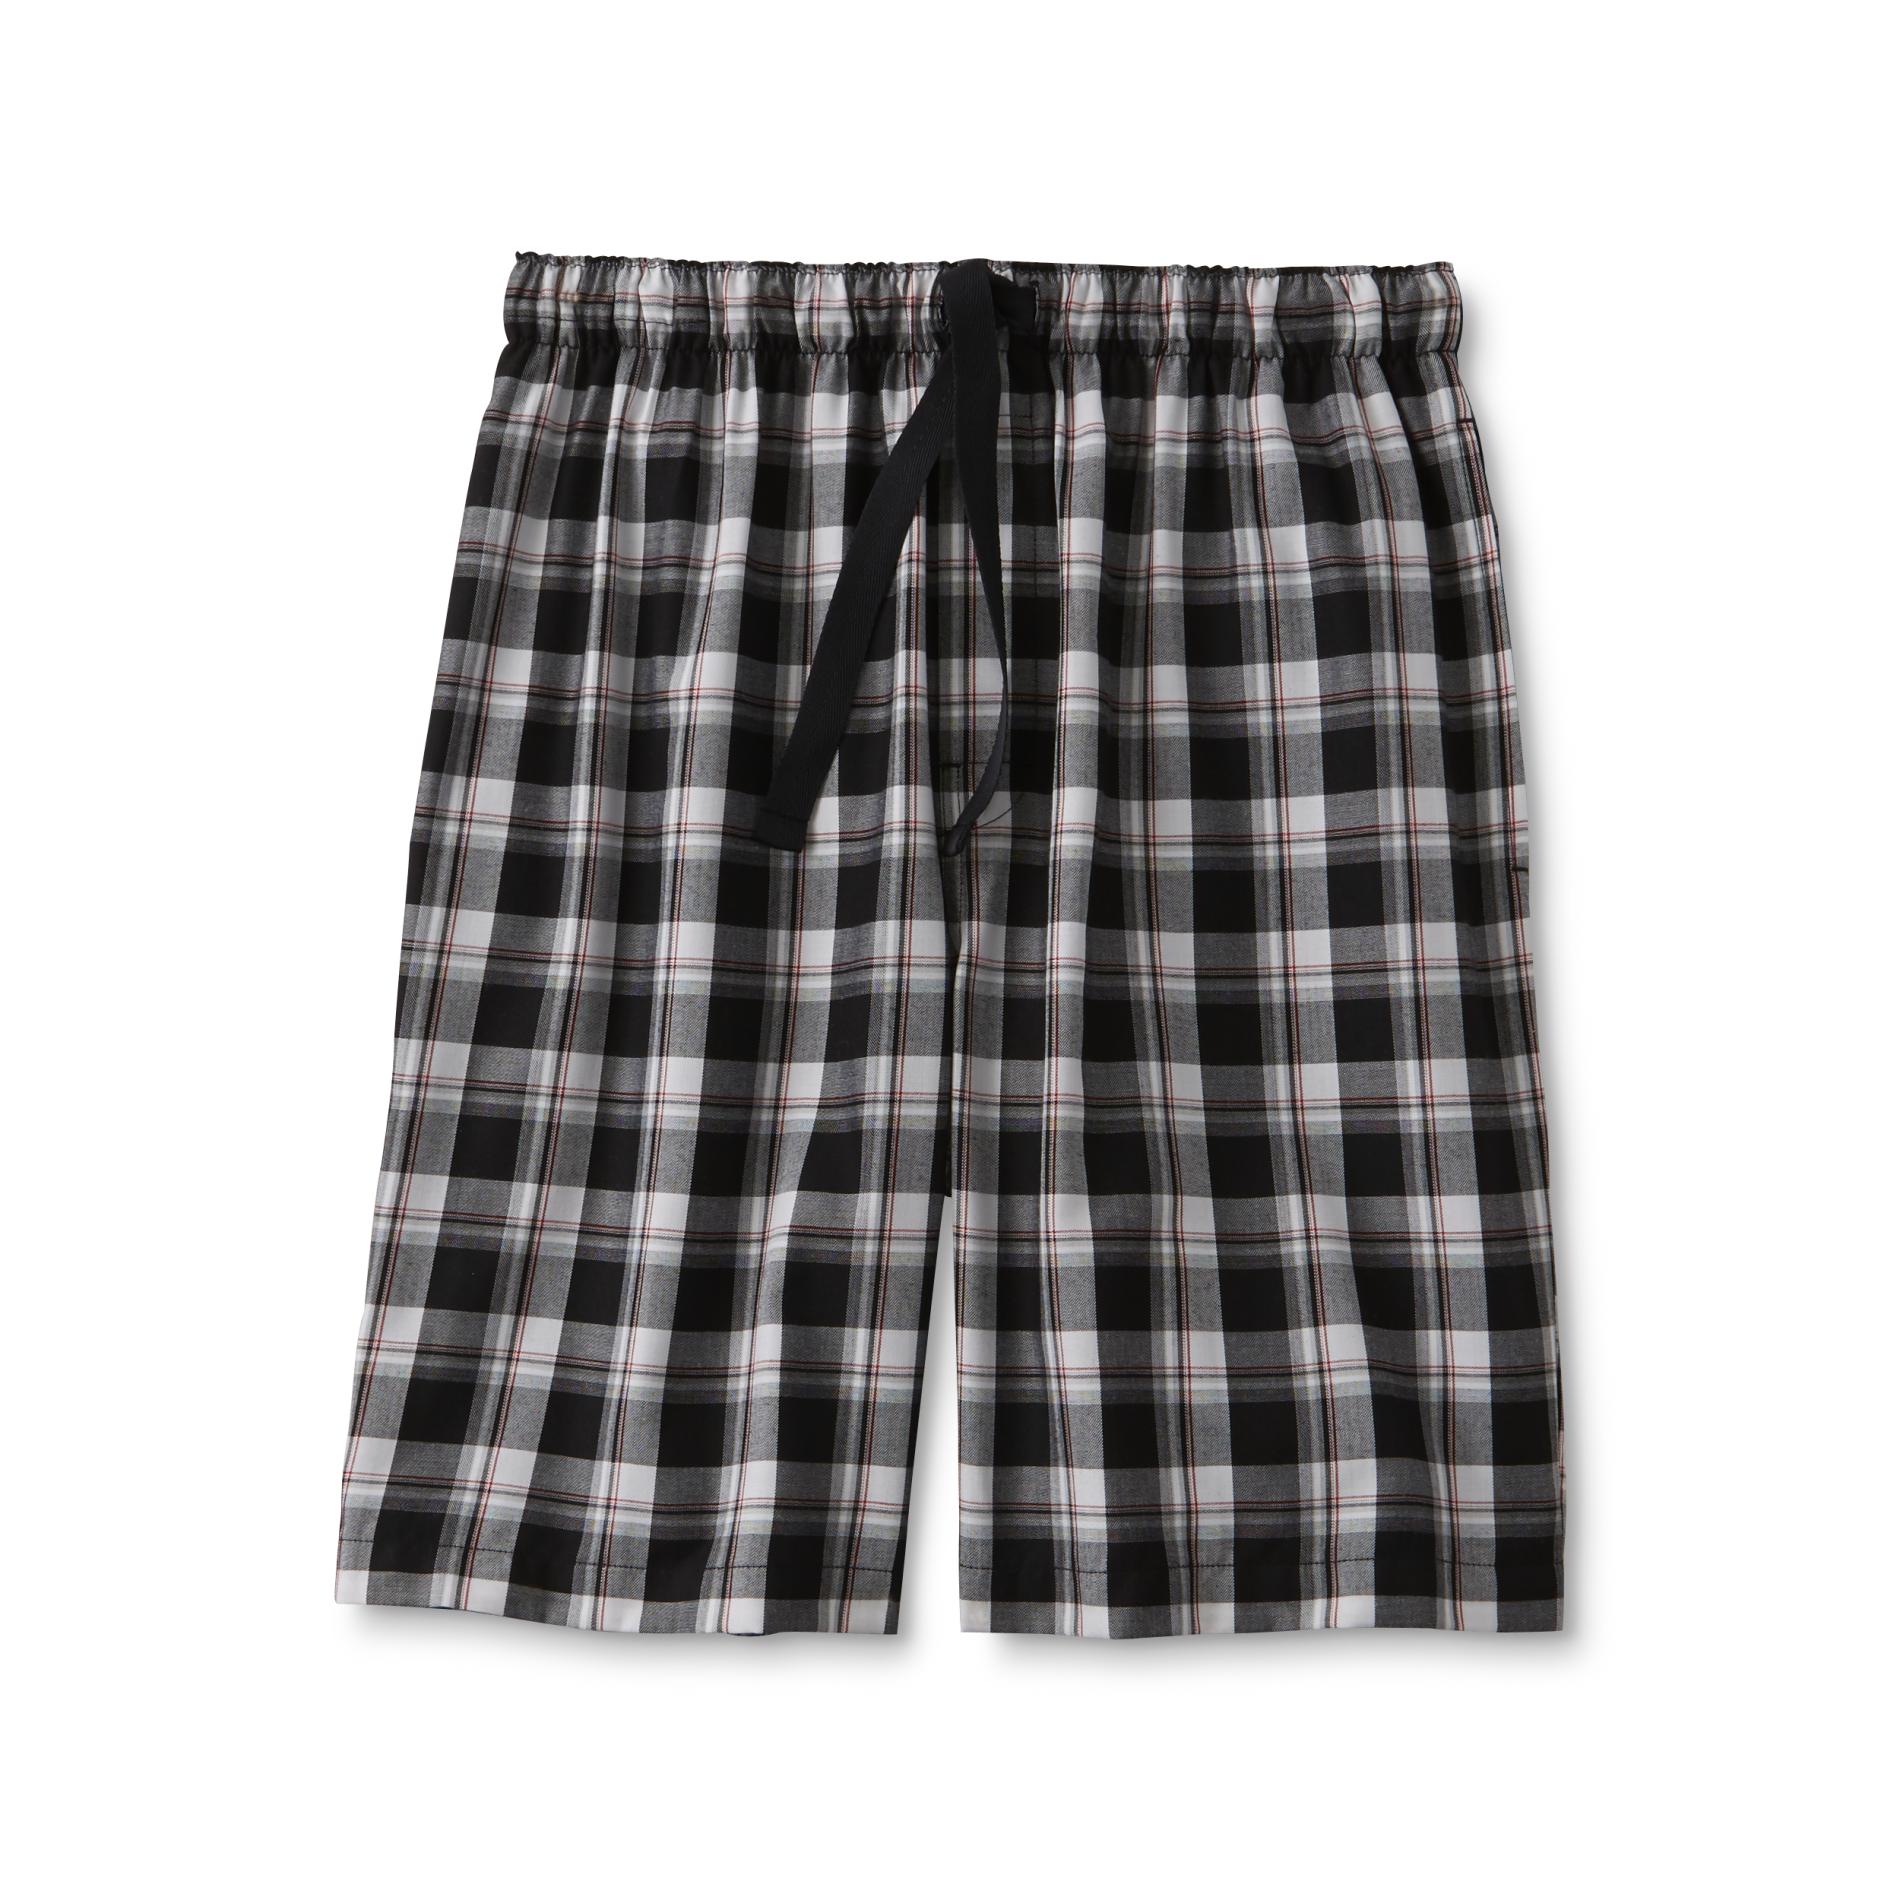 Ove Glove Men's Flannel Pajama Shorts - Plaid | Shop Your Way: Online ...